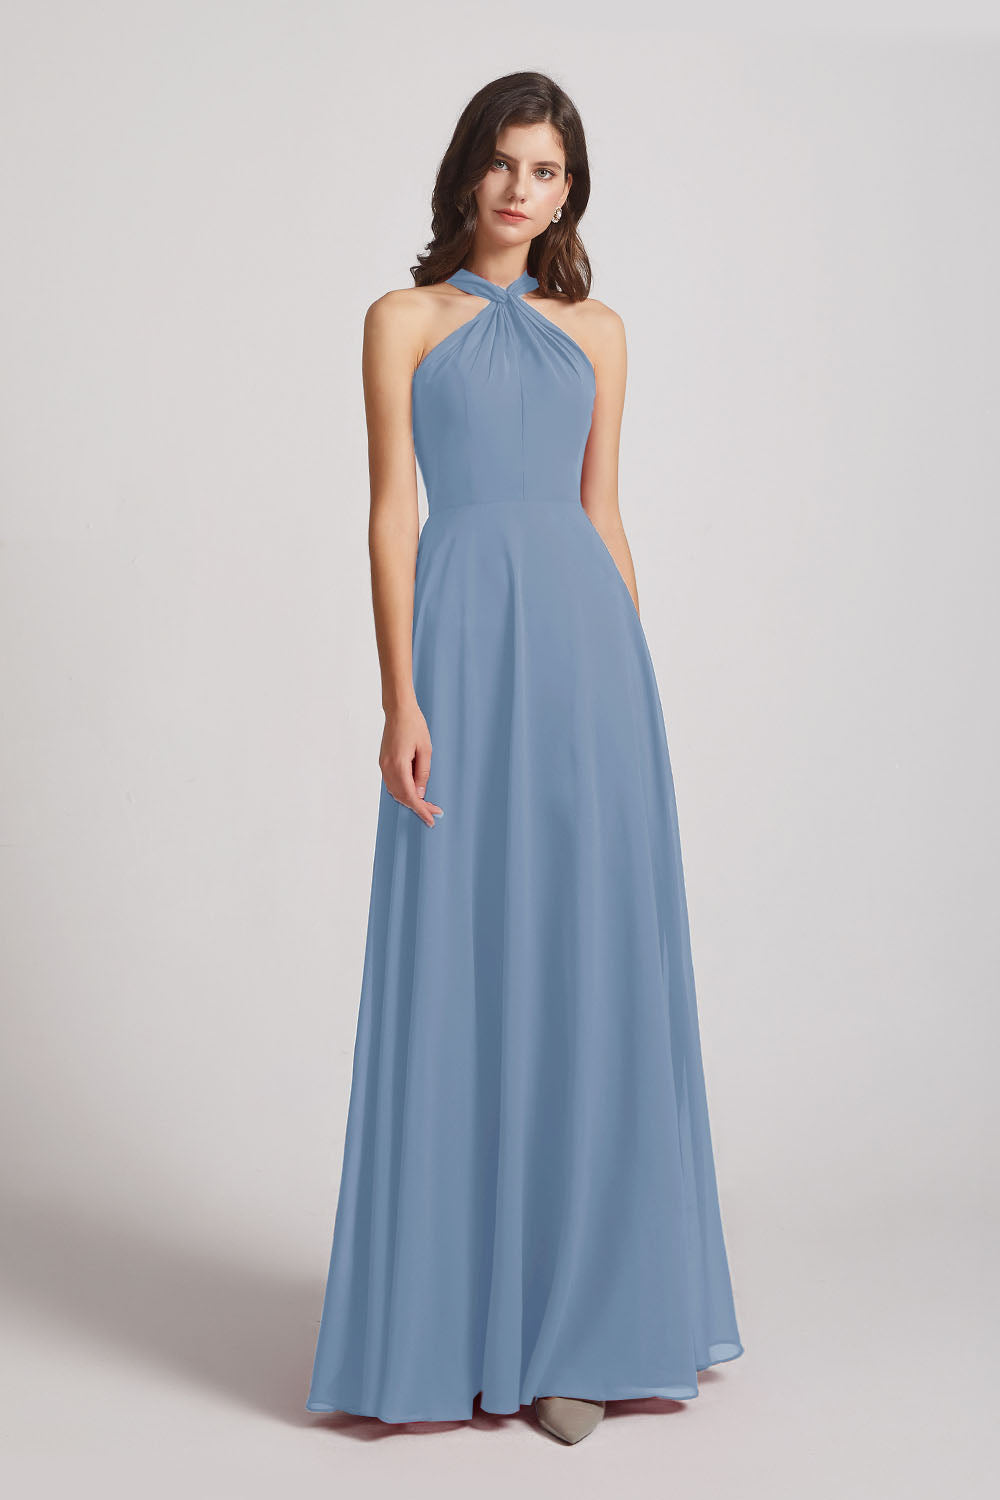 Alfa Bridal Dusty Blue Floor Length Chiffon Bridesmaid Dresses with Criss Cross Neckline (AF0113)